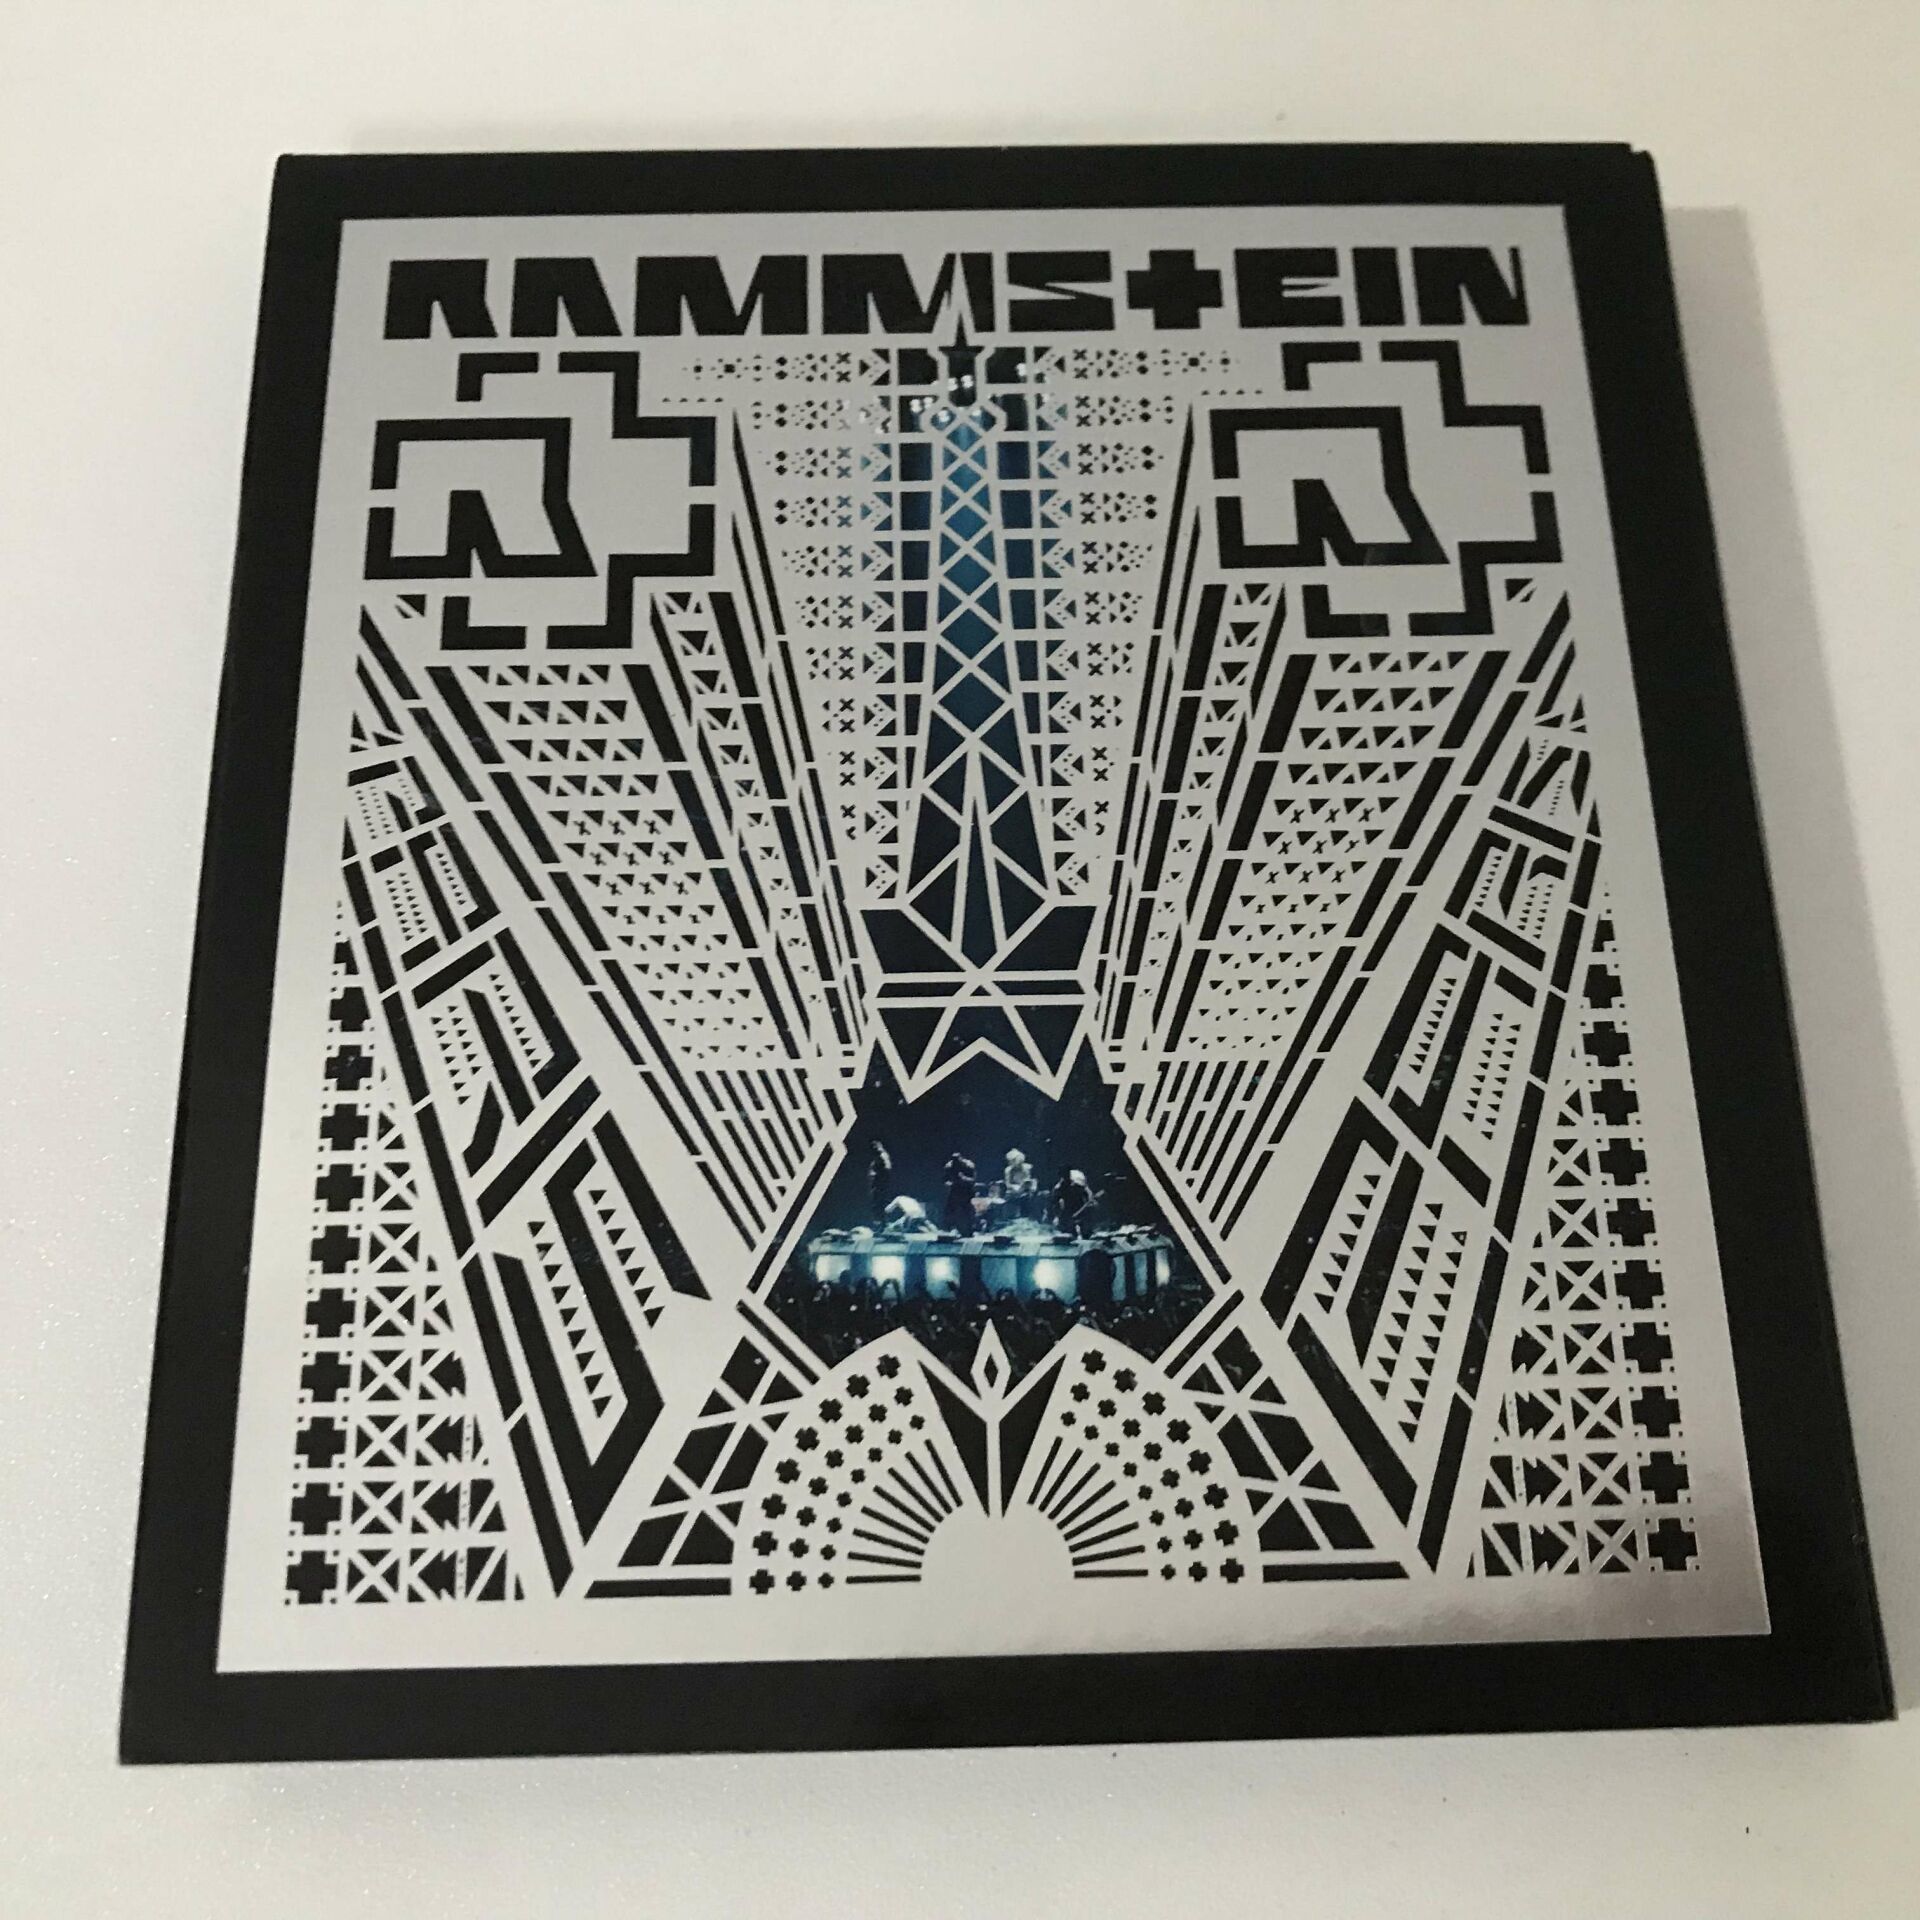 Rammstein – Paris 2 CD